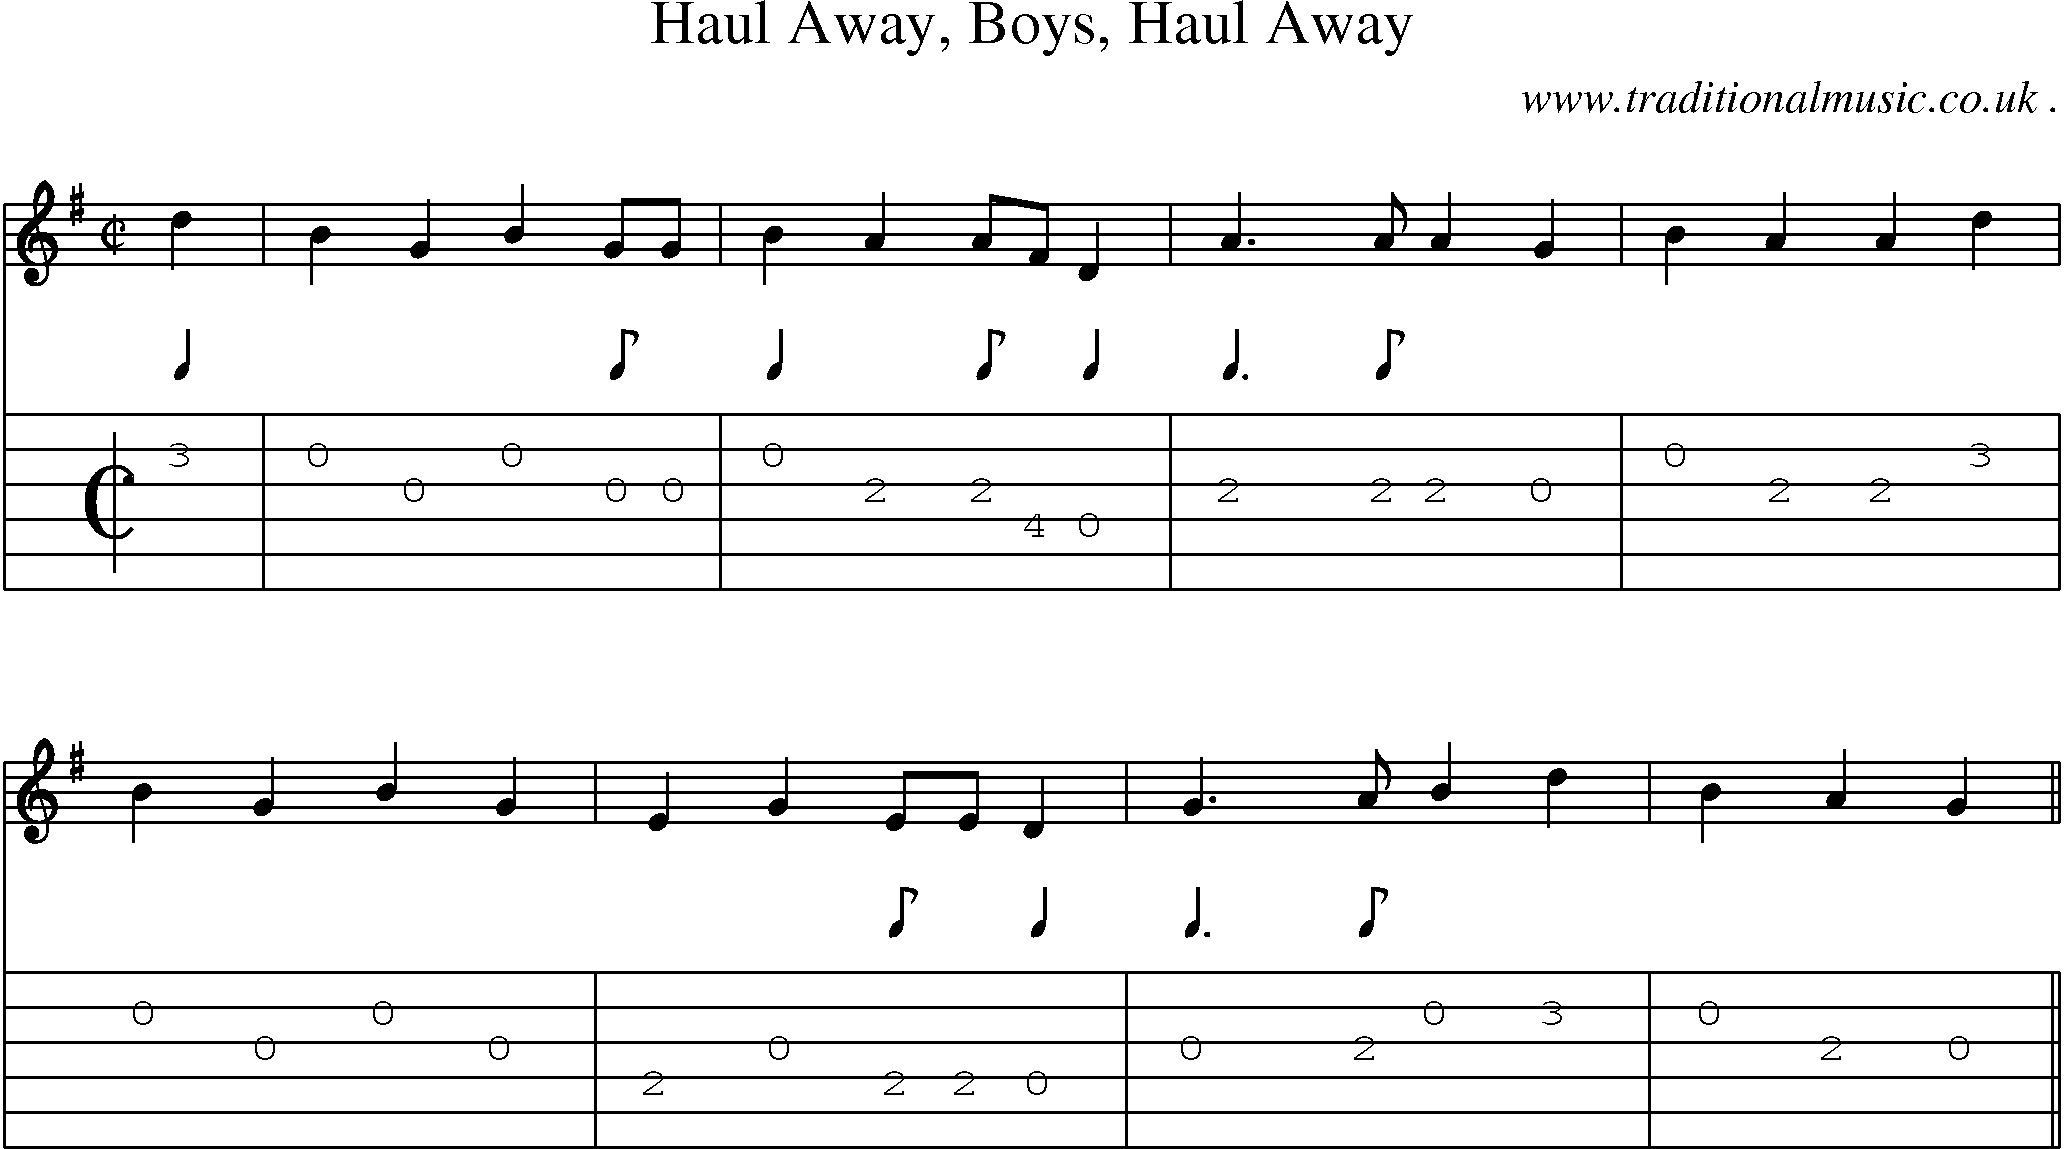 Sheet-Music and Guitar Tabs for Haul Away Boys Haul Away